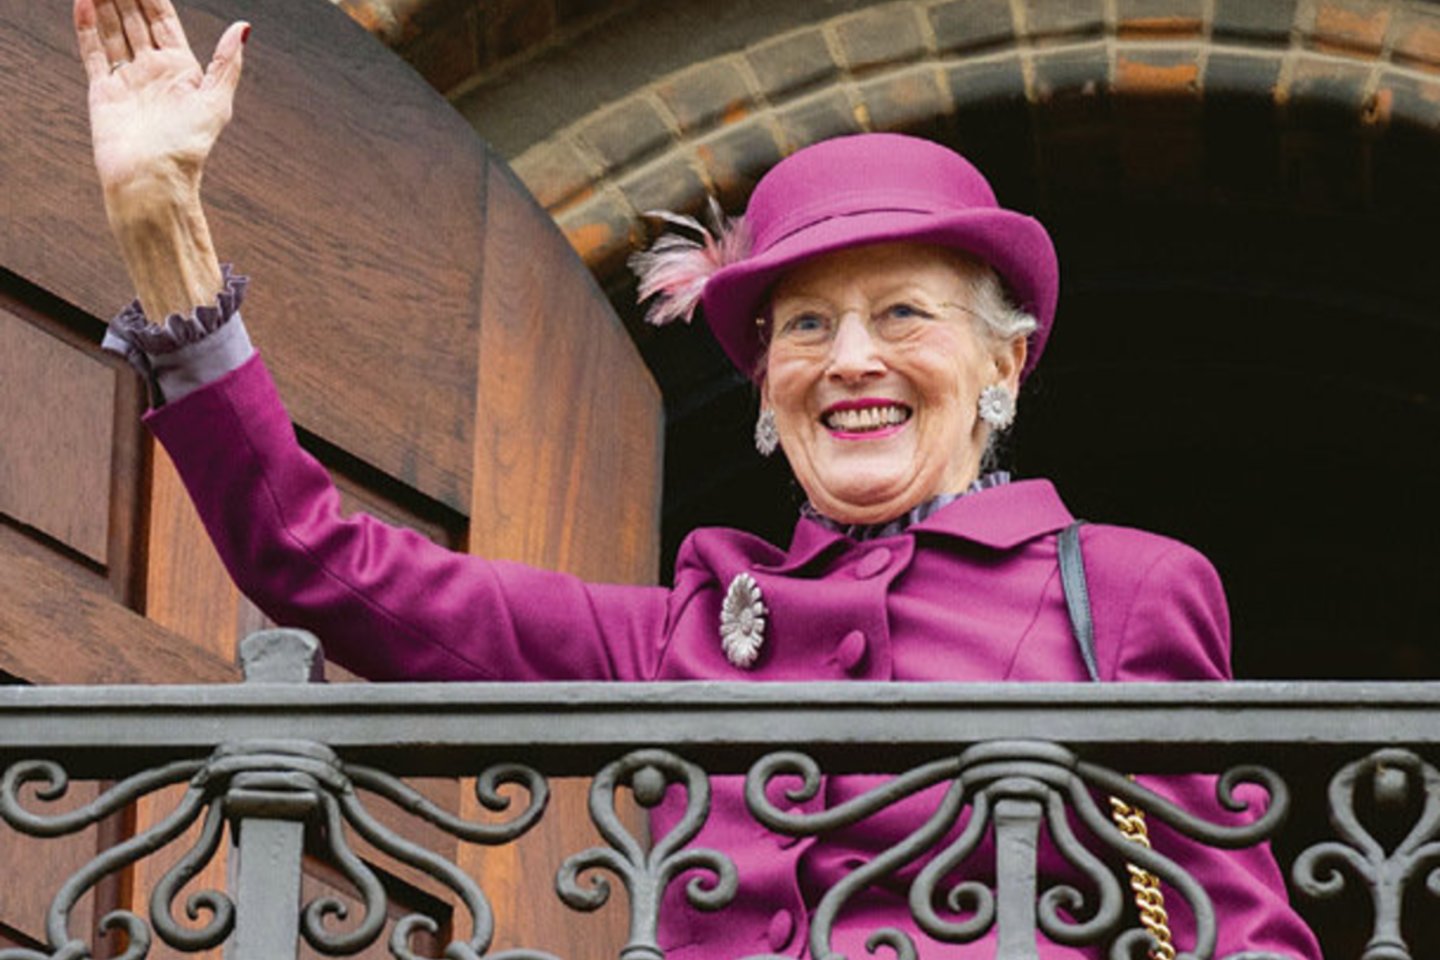  Danijos karalienė Margrethe II.